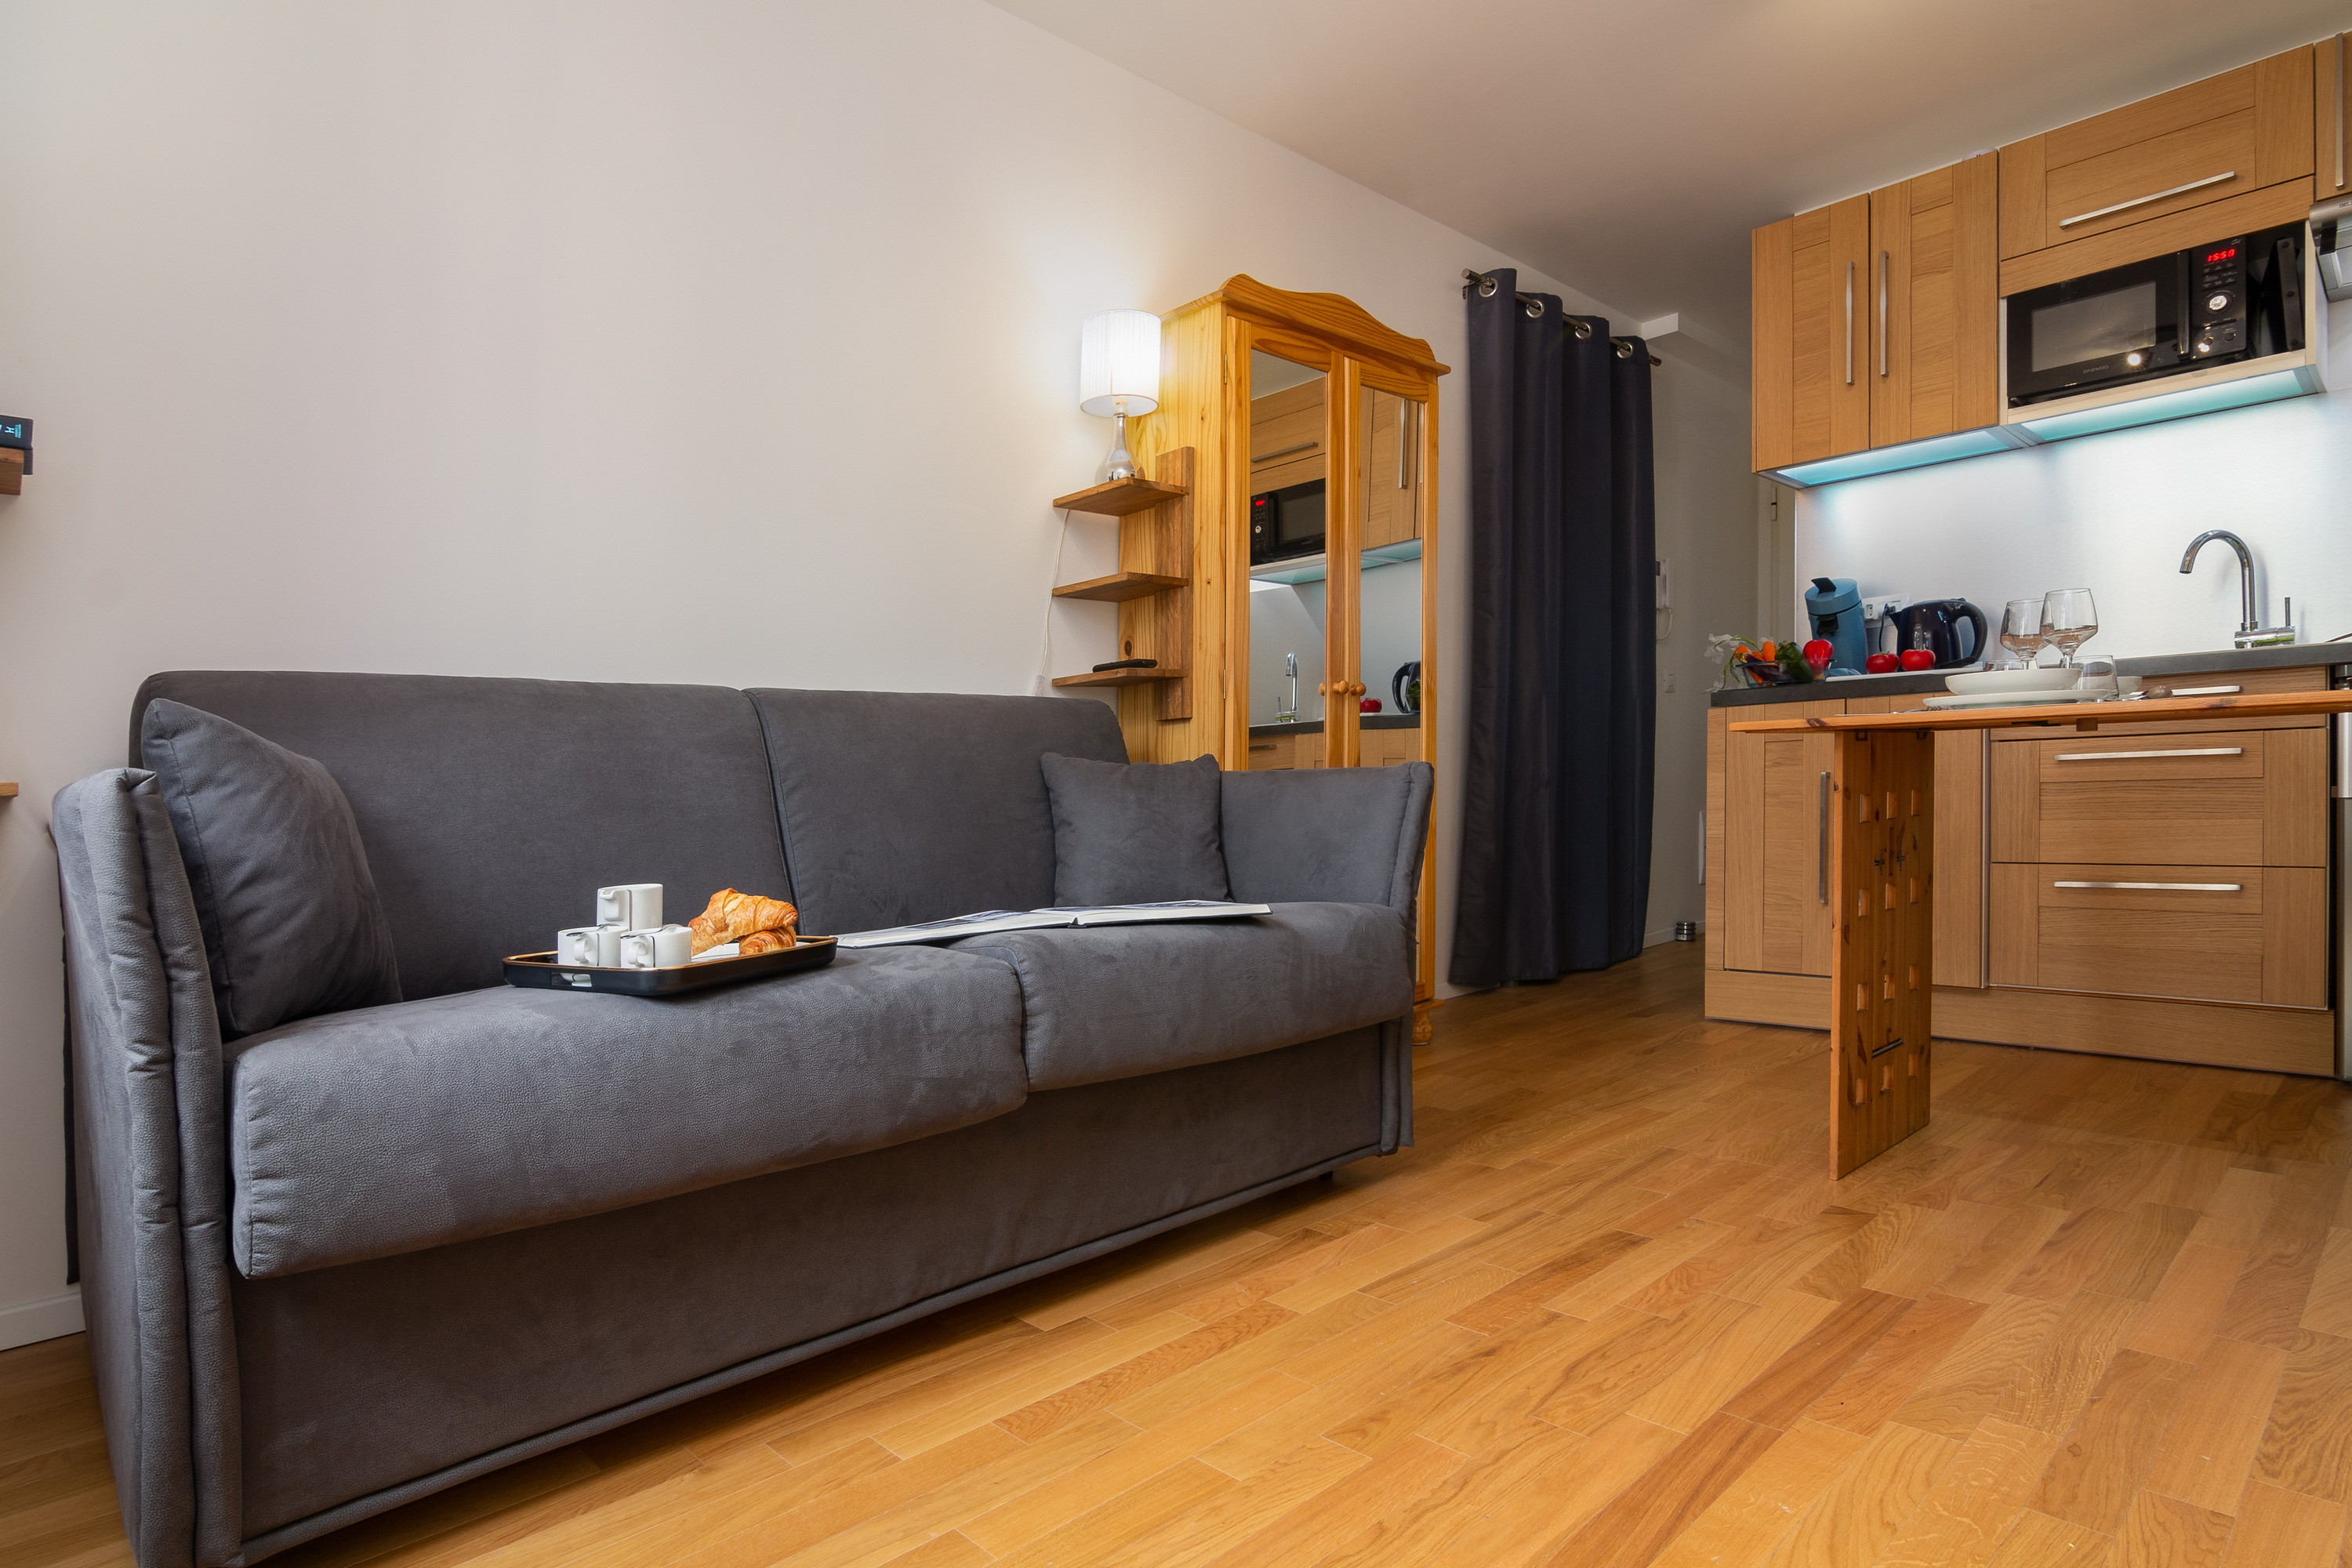 Appartement Paccard 305 - Frankrijk - Chamonix